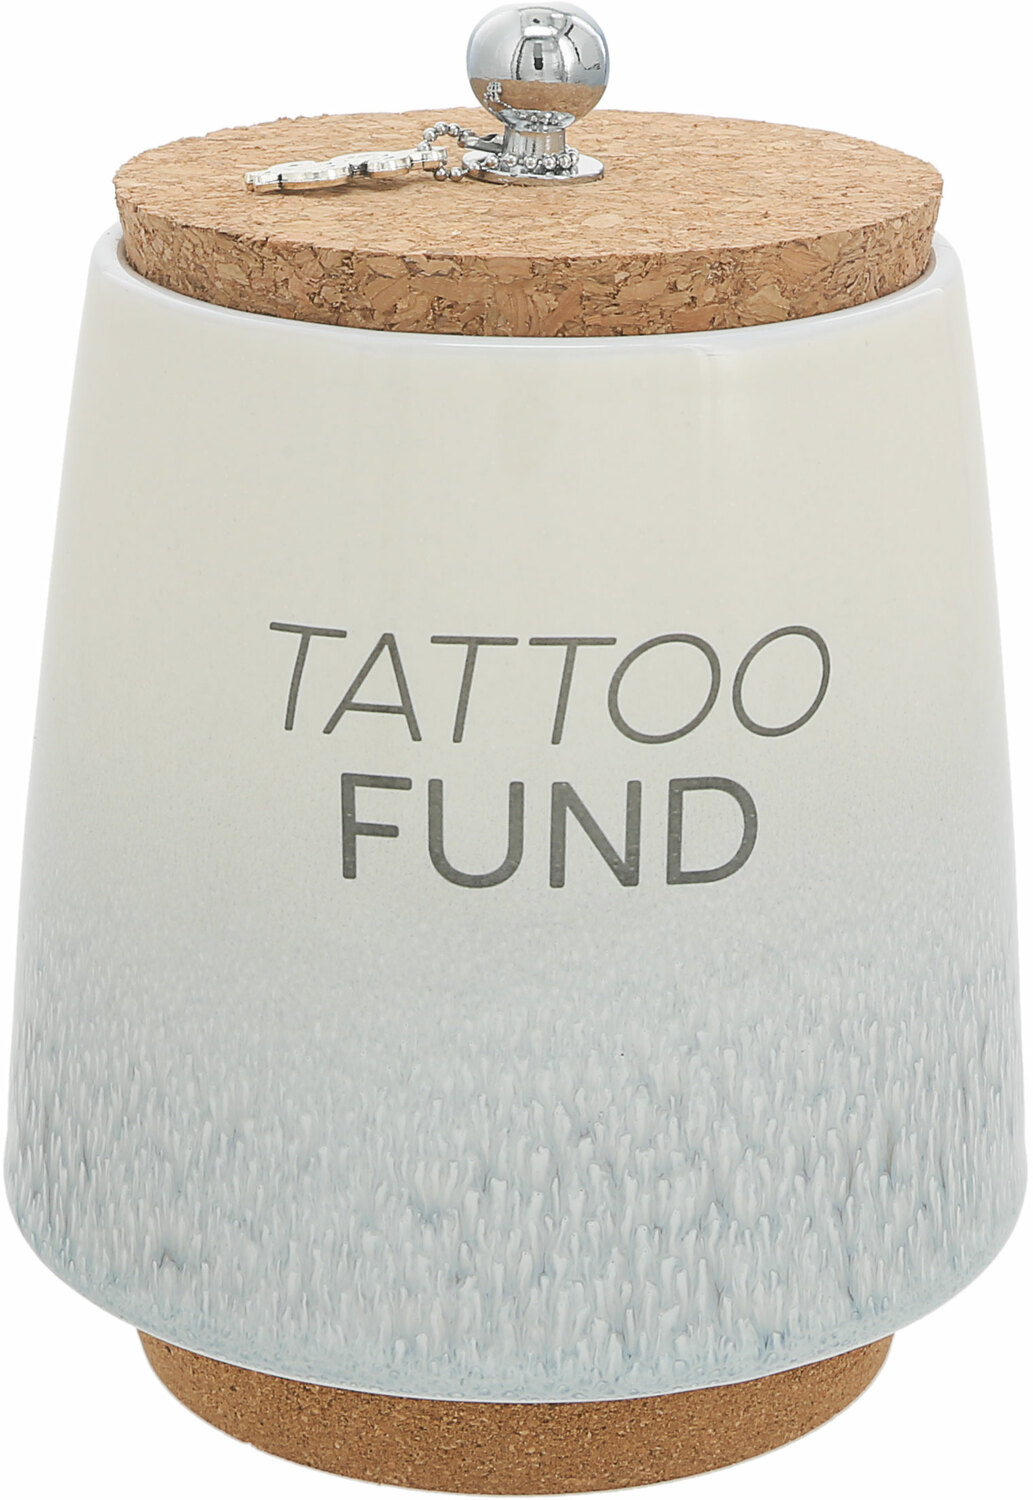 Tattoo by So Much Fun-d - Tattoo - 6.5" Ceramic Savings Bank